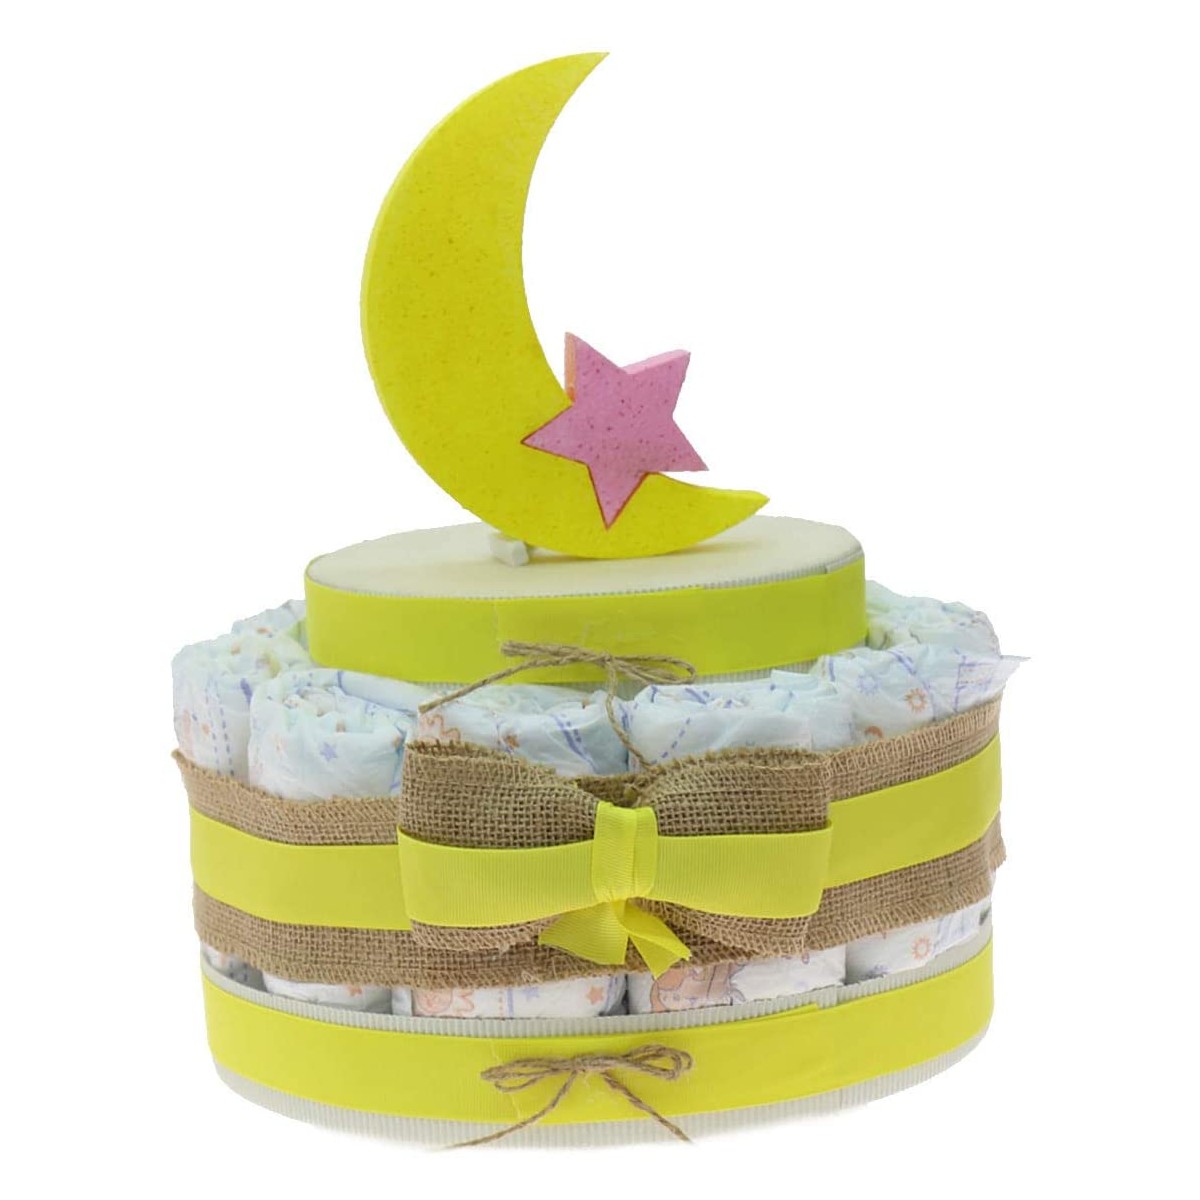 Torta con 15 pannolini tema luna, idea regalo nascita